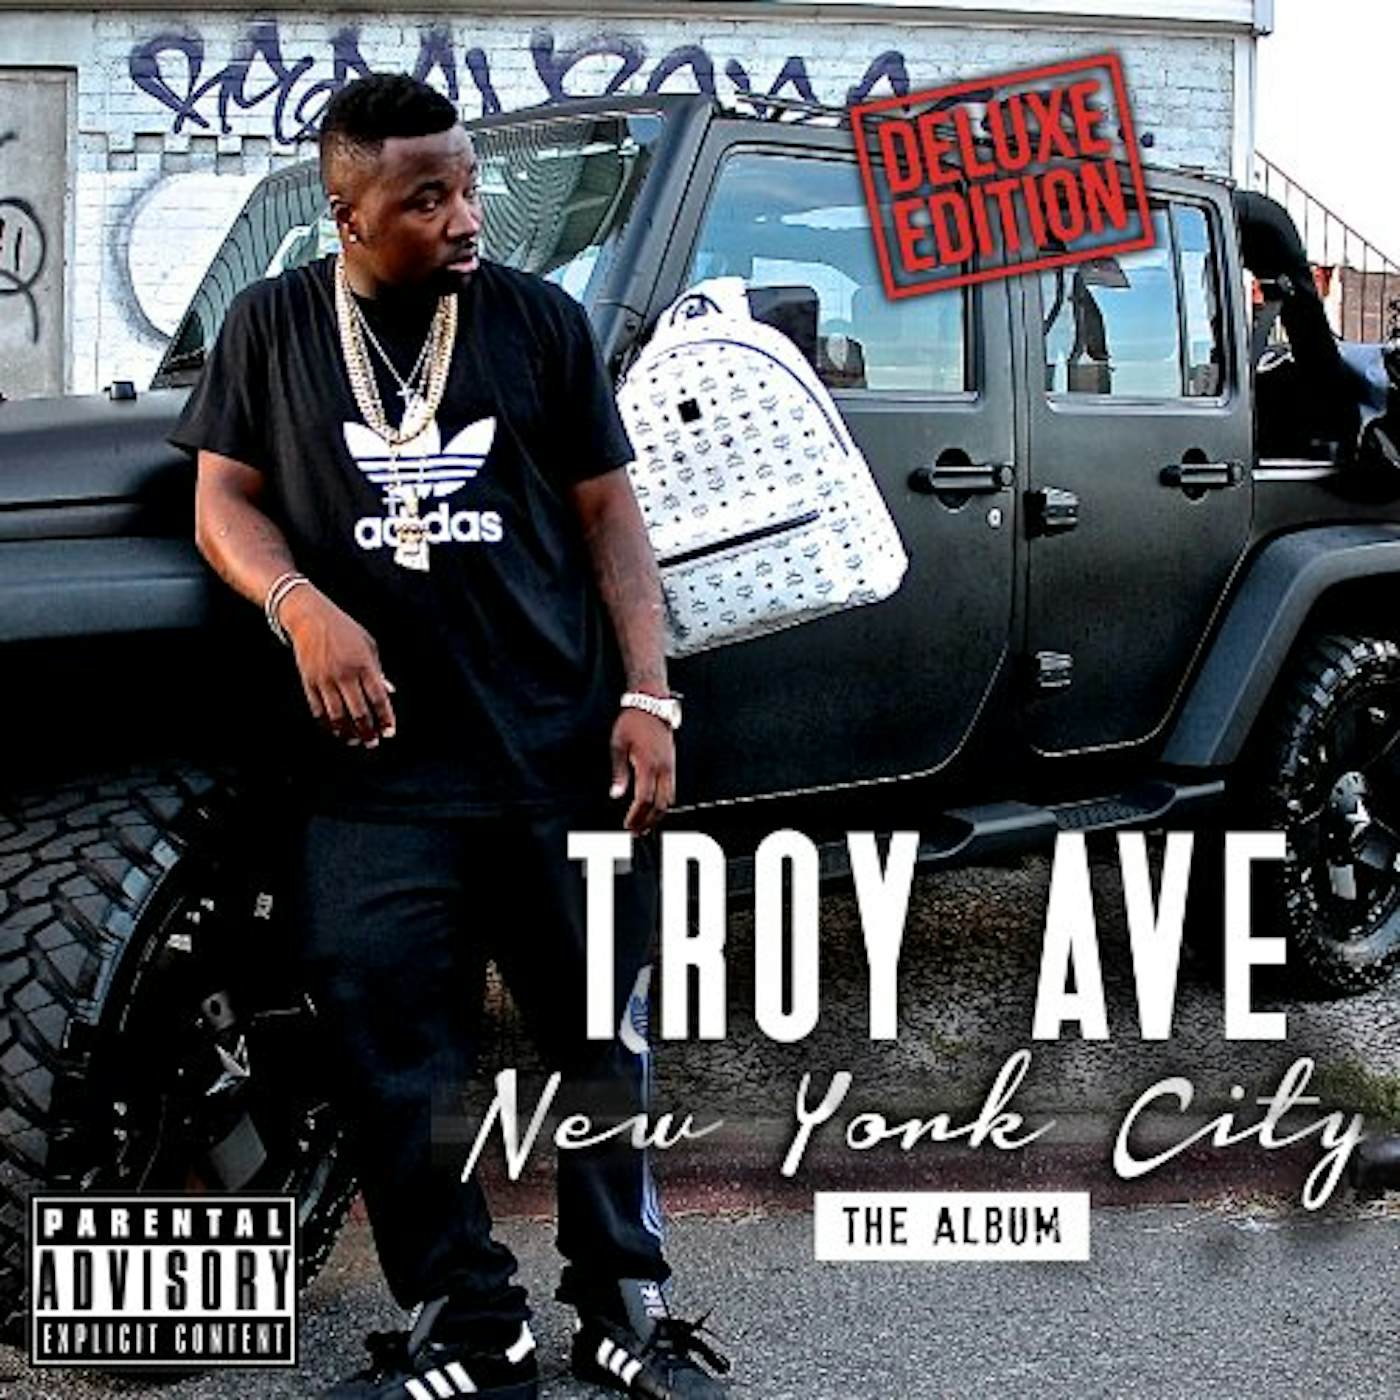 Troy Ave NEW YORK CITY CD